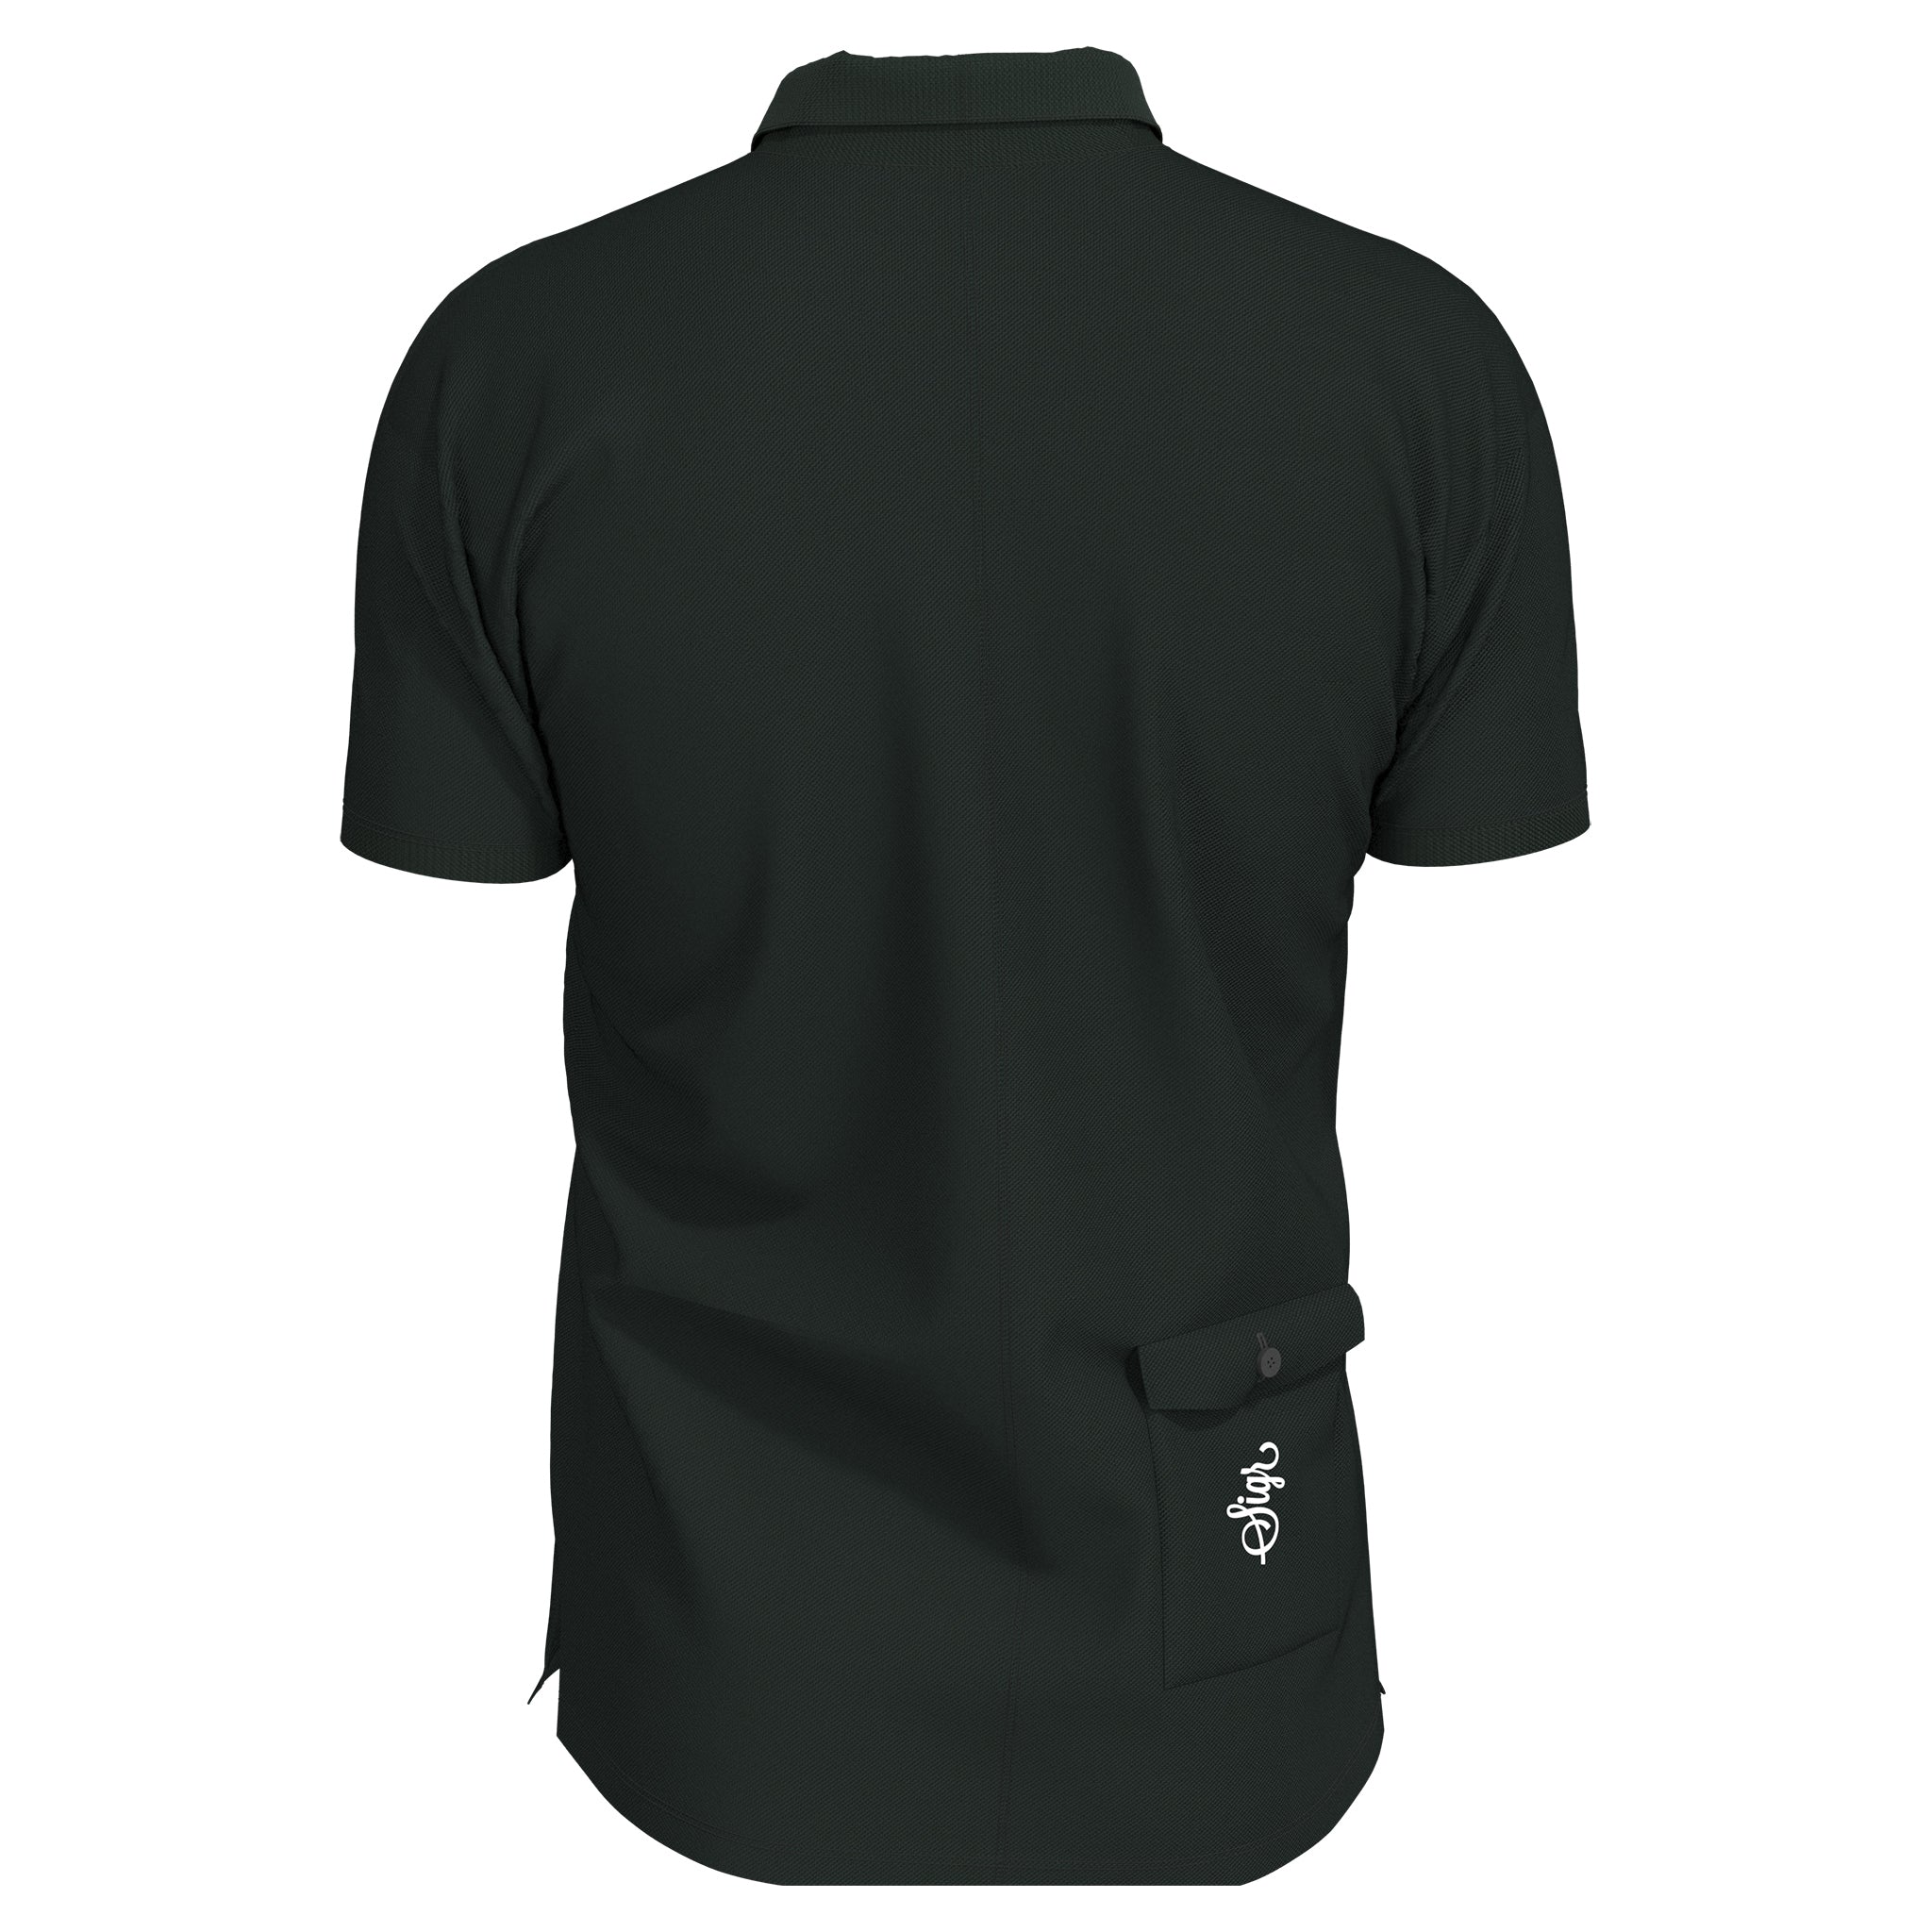 Pike - Dark Green Polo Shirt with Sigr Logo for Men